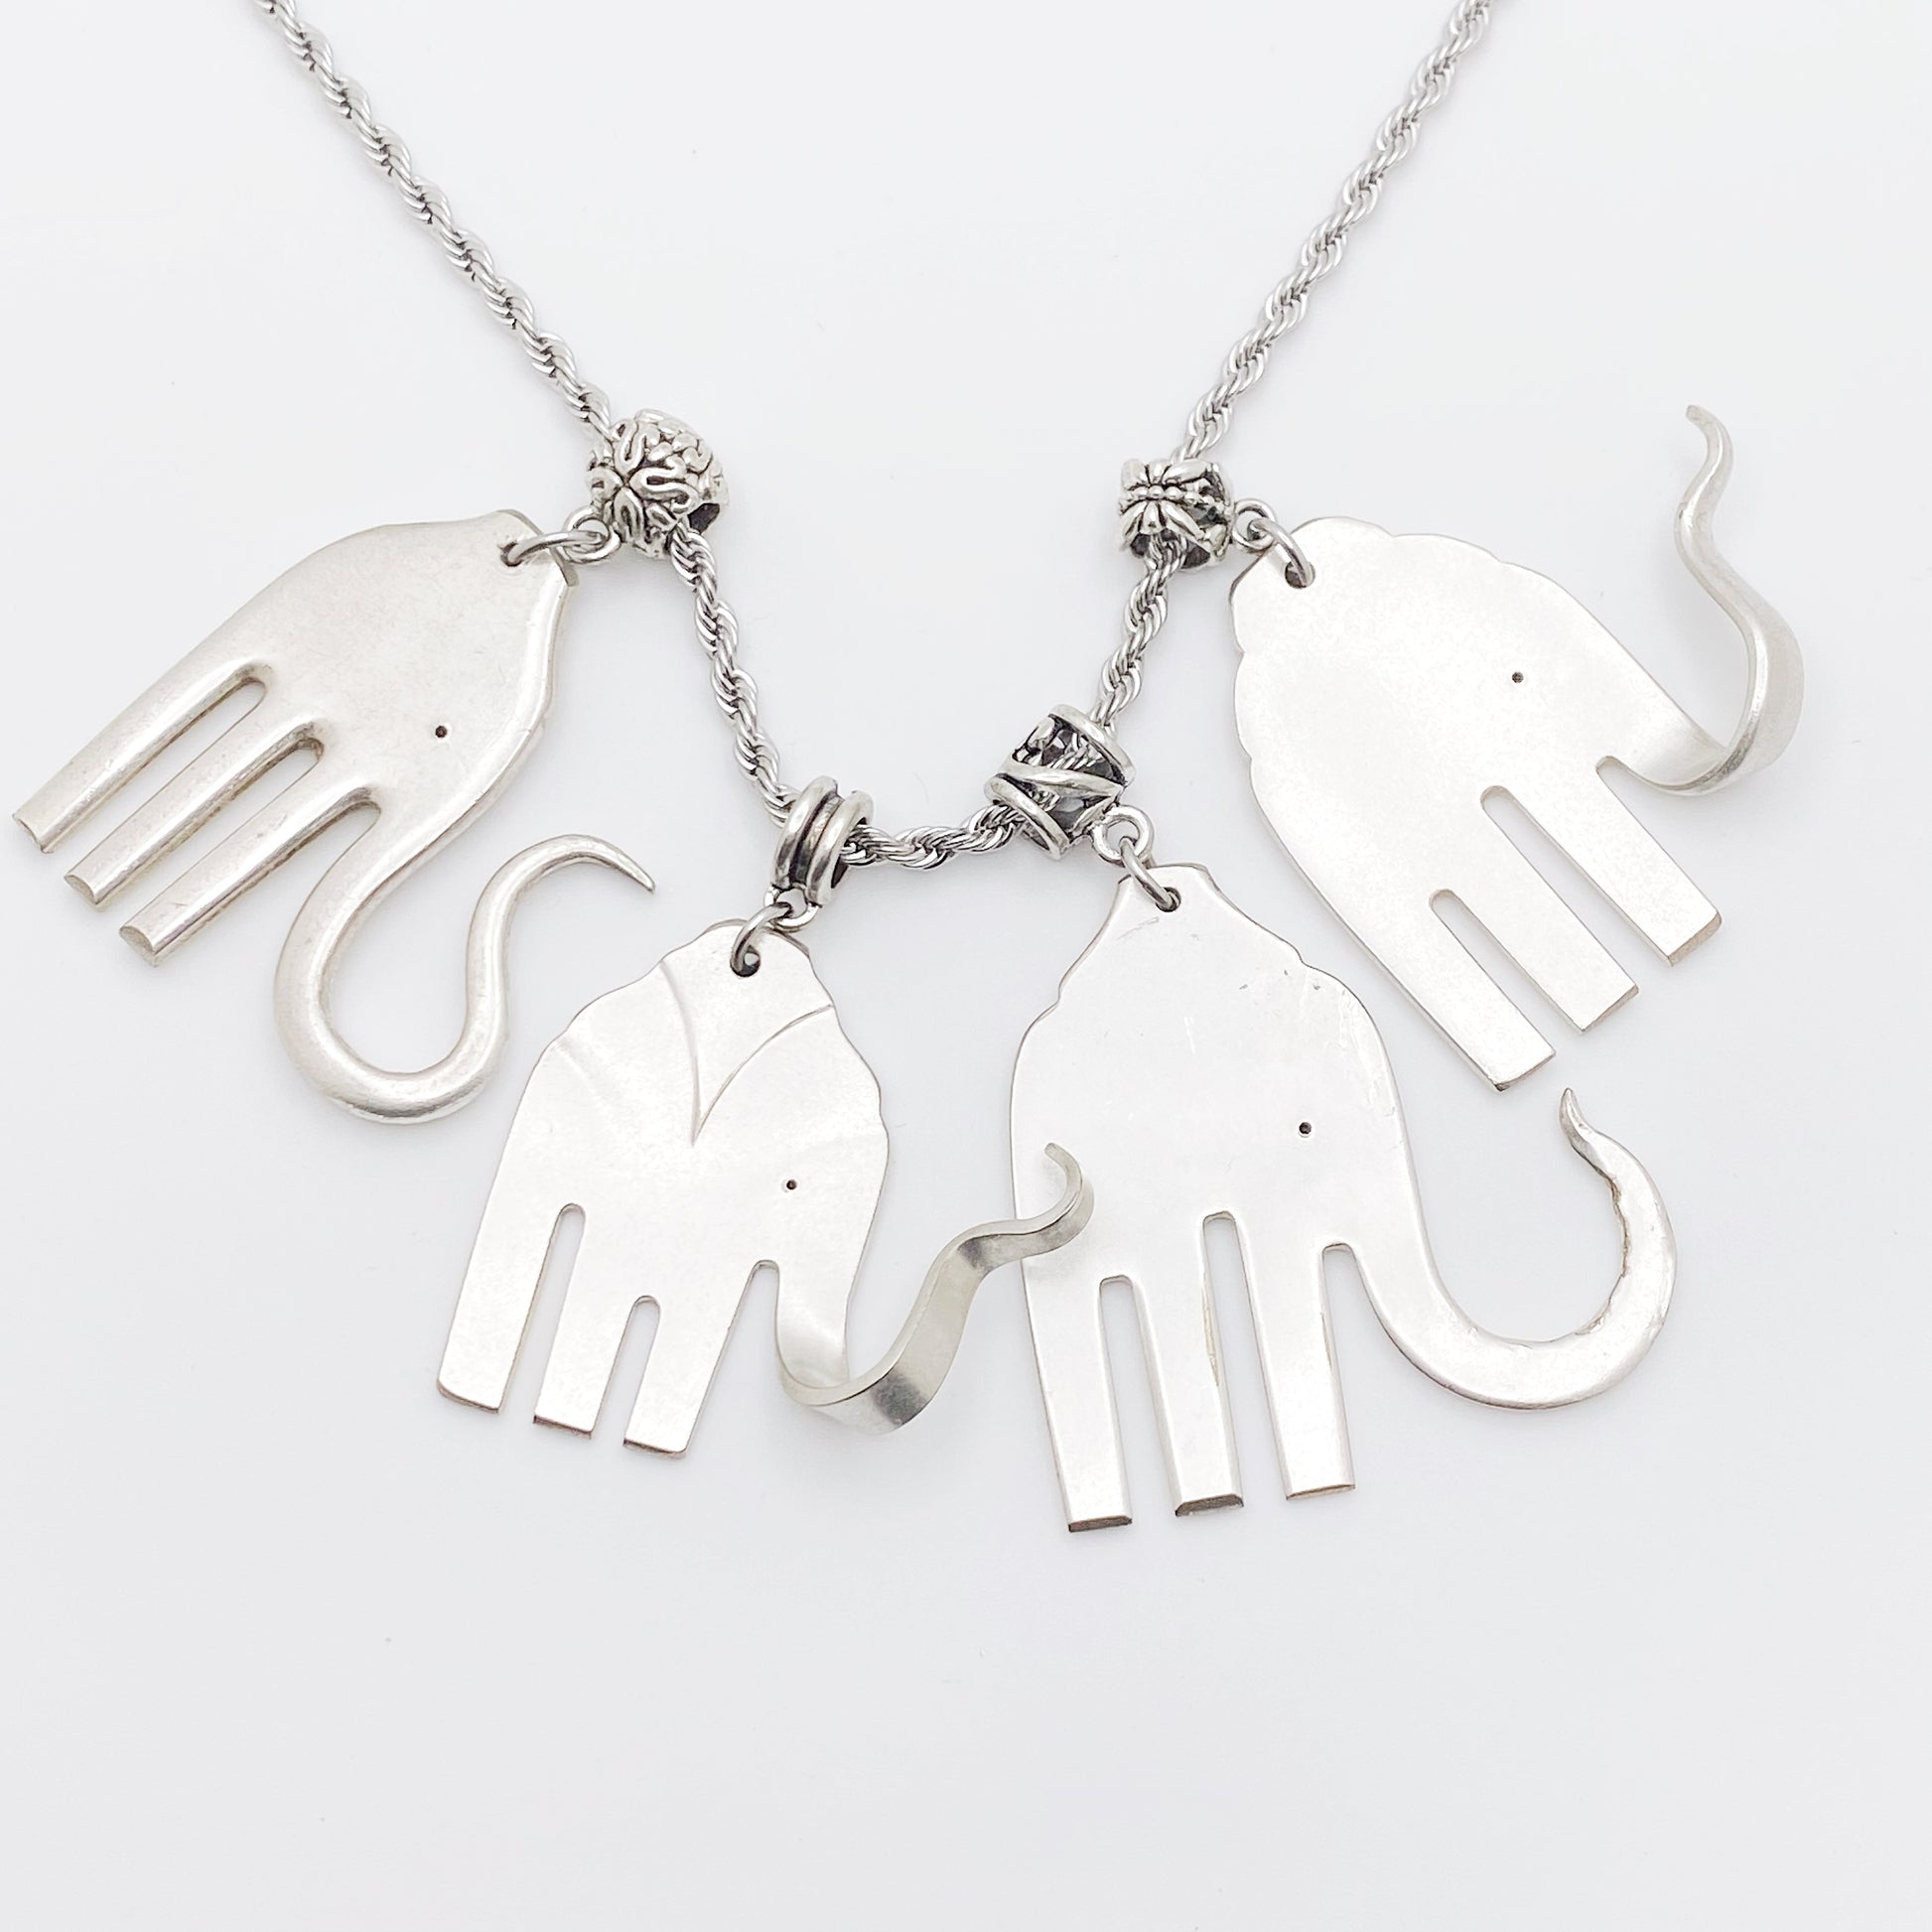 Elefork Necklace, Elephant Fork Pendant, Vintage Silverware Jewelry Necklaces callistafaye   